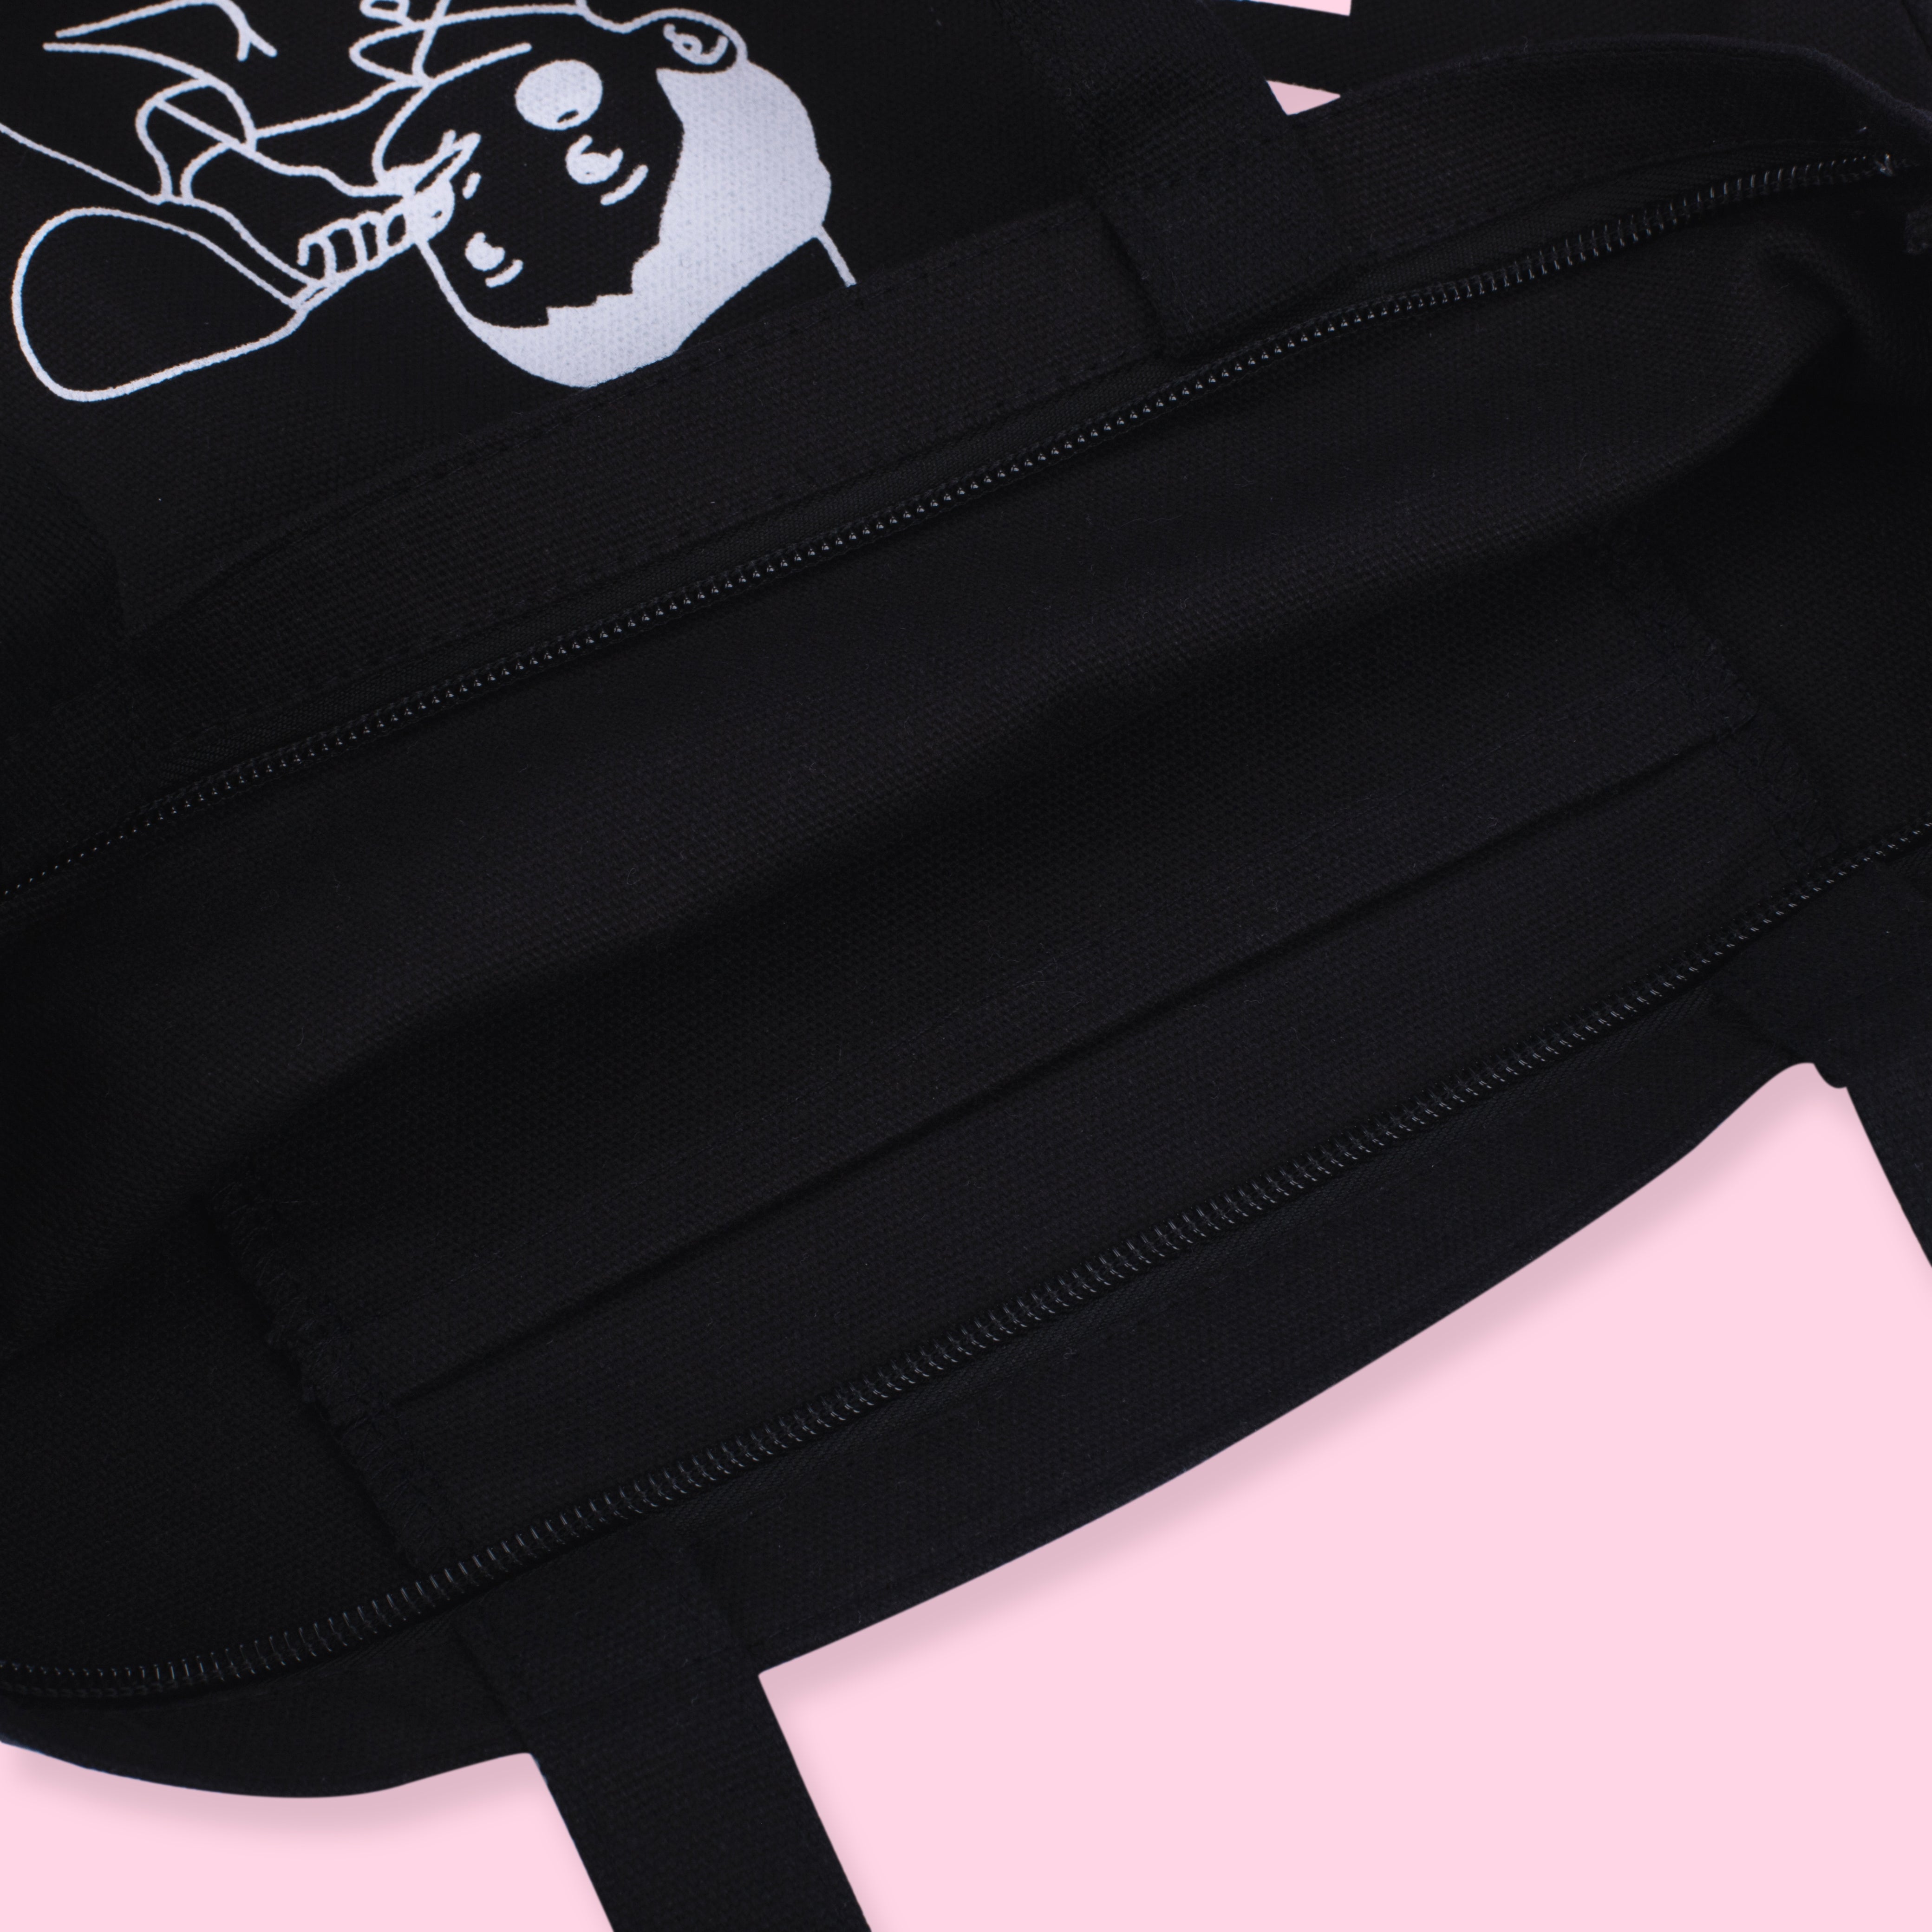 Cute Printed Stylish Tote Bag - Black